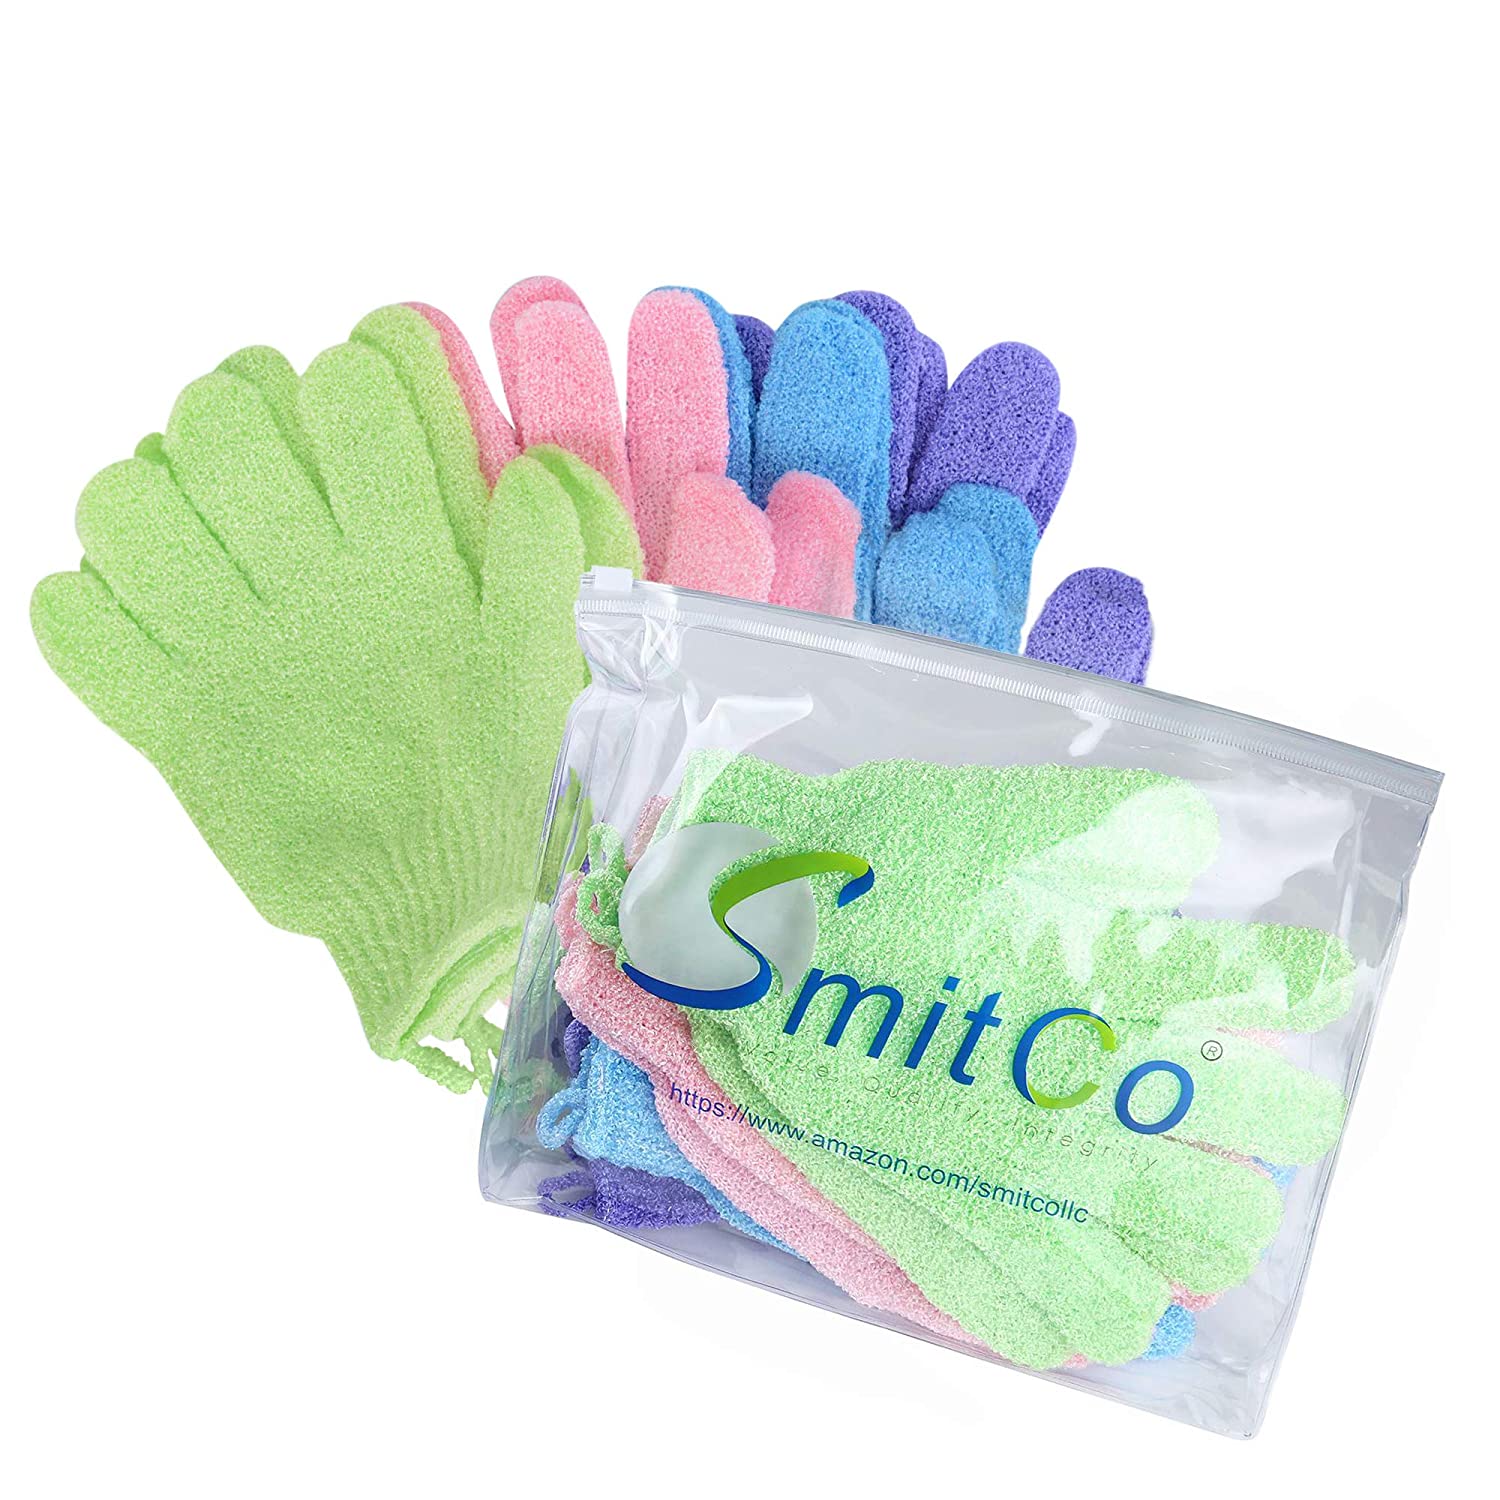 SMITCO Exfoliating Body Scrubbing Gloves, 4-Pack